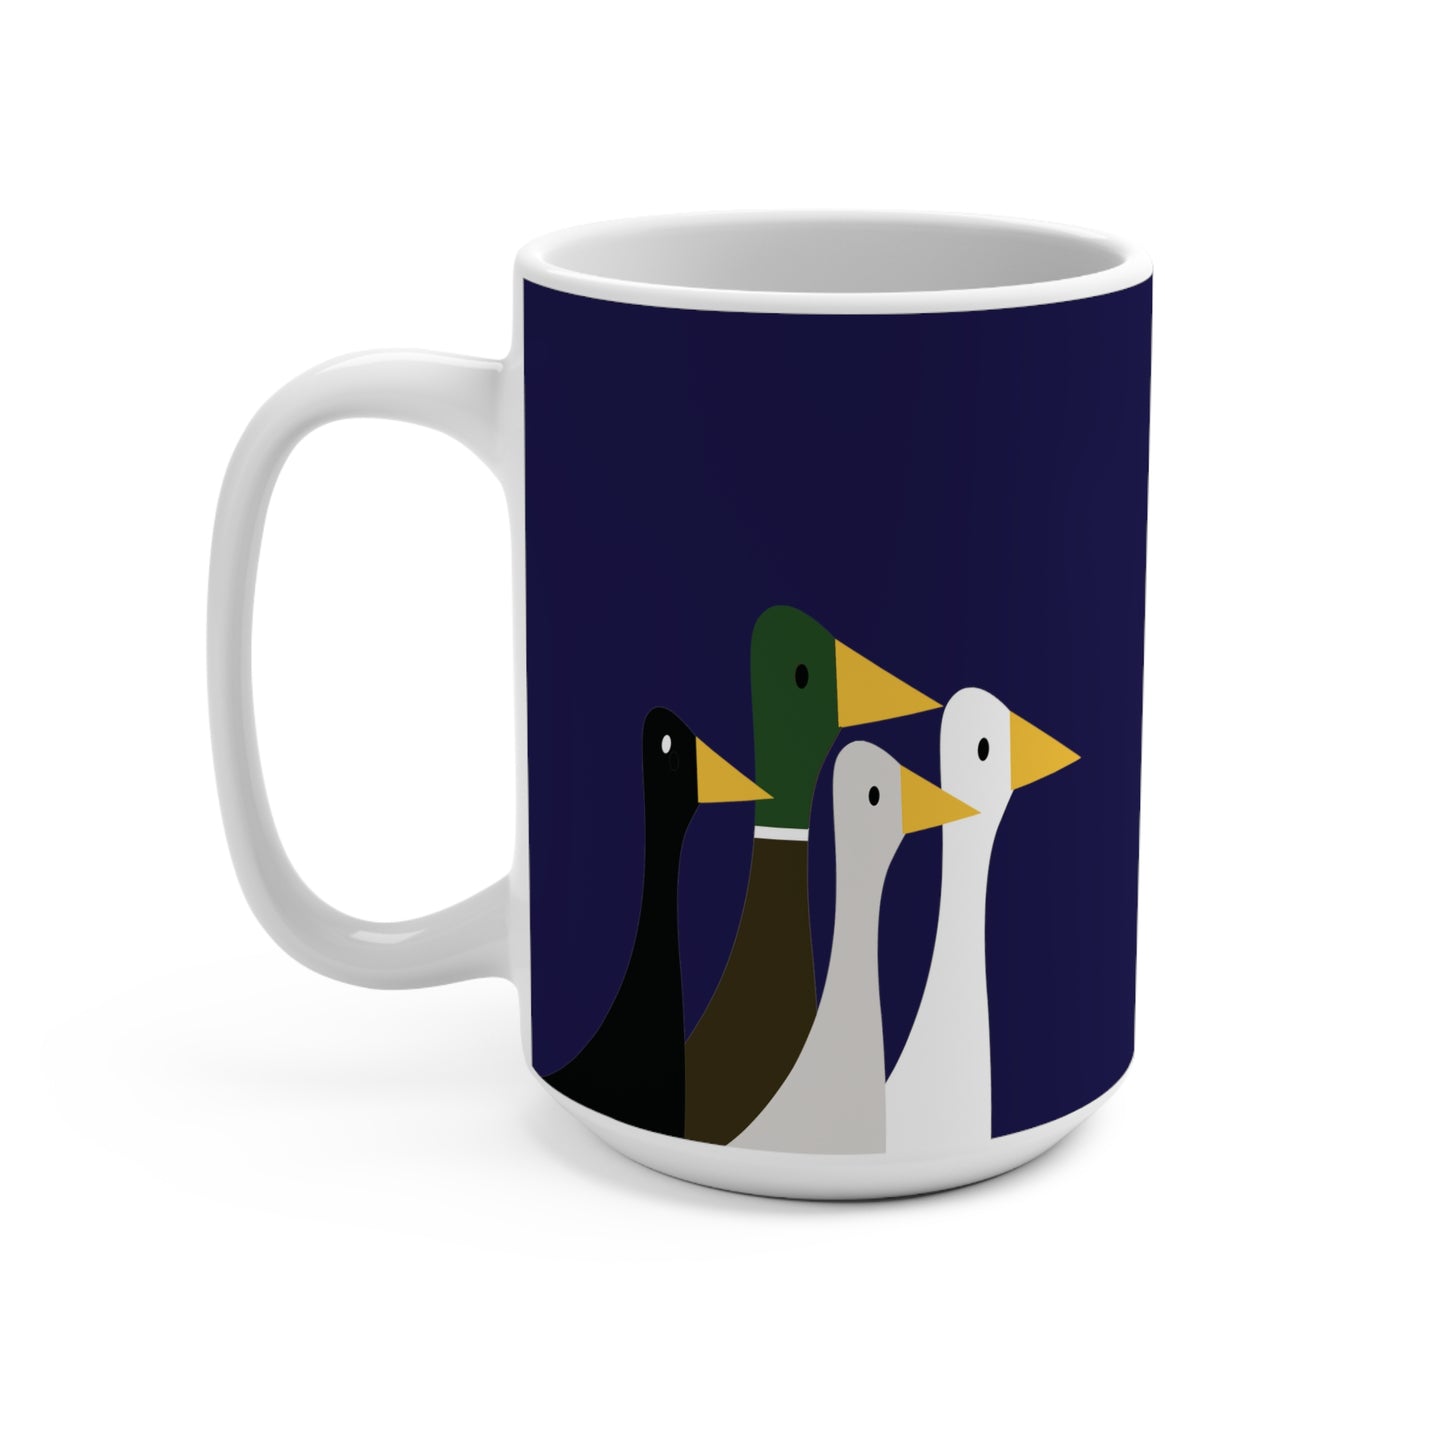 Take the ducks with you - Cetacean Blue 0c134f - Mug 15oz